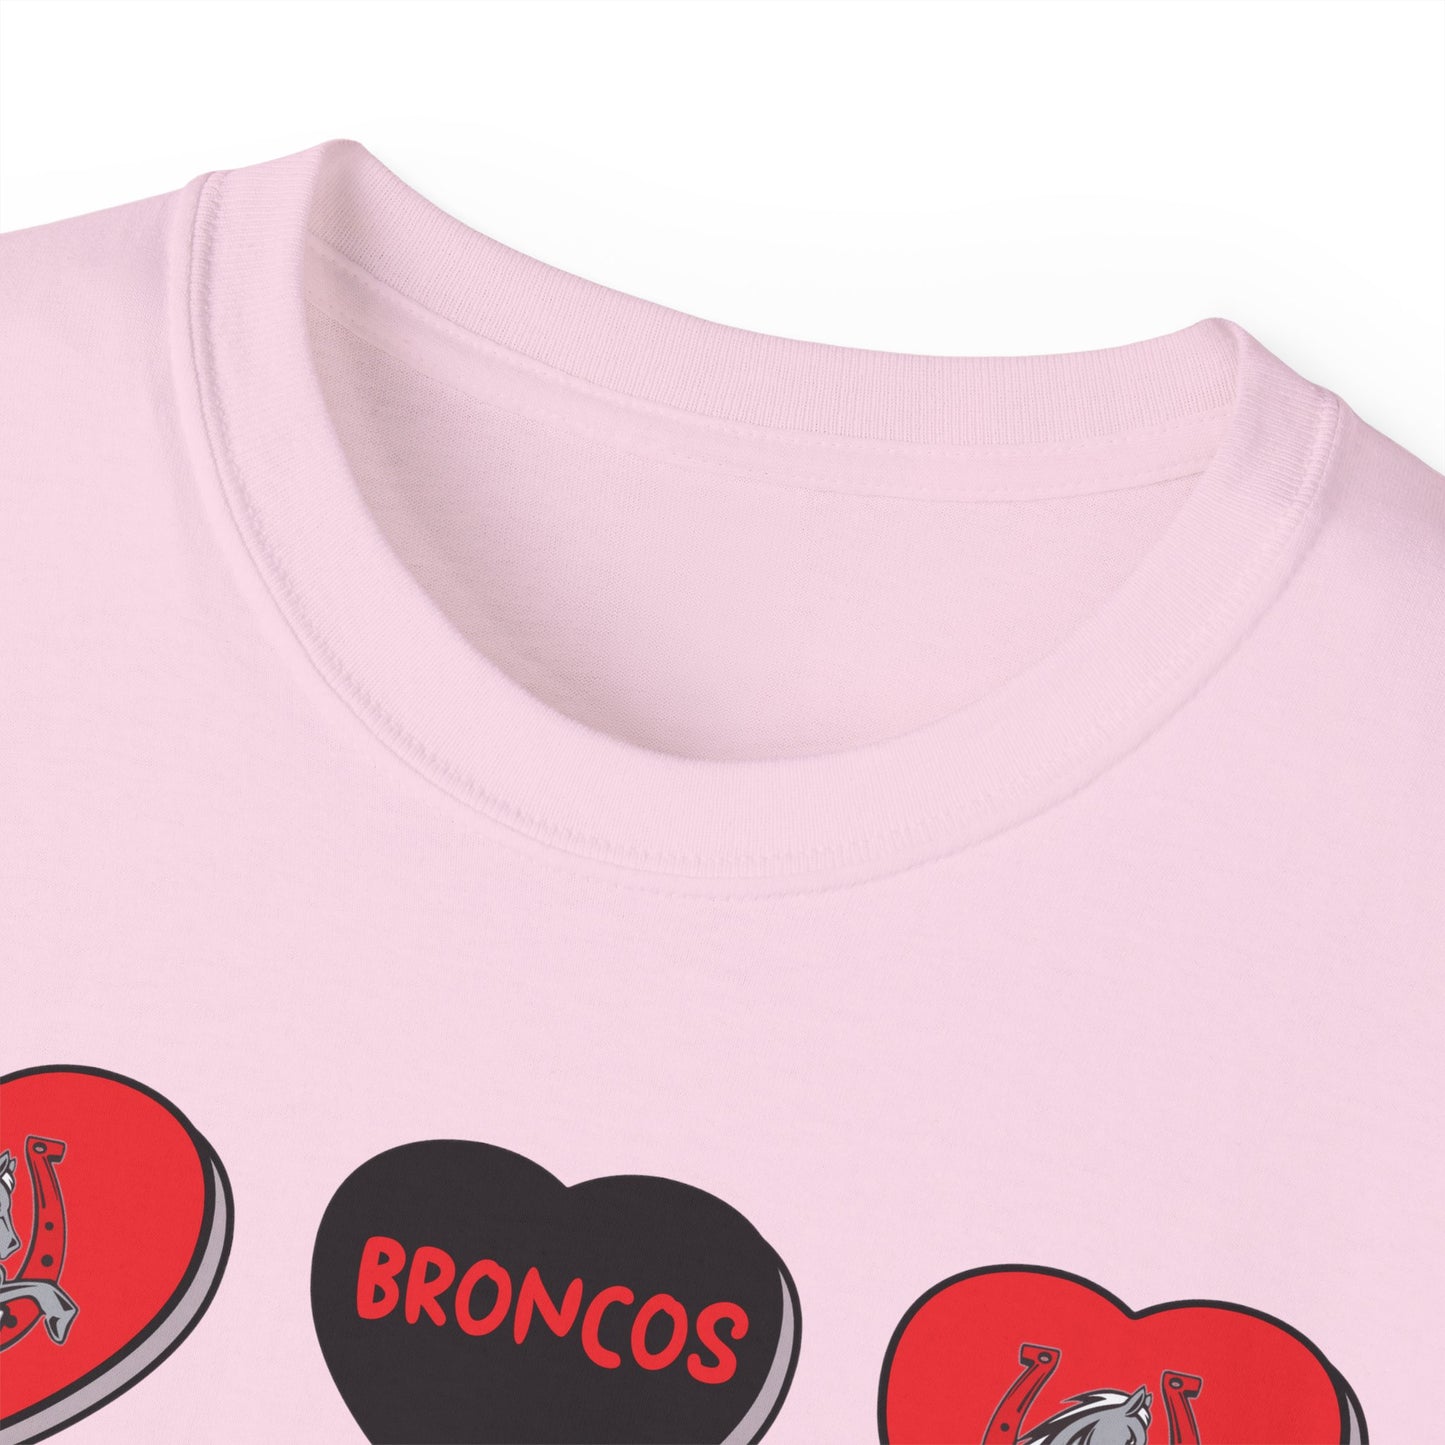 Broncos-Apparel Sweetheart’s - Unisex t-shirt